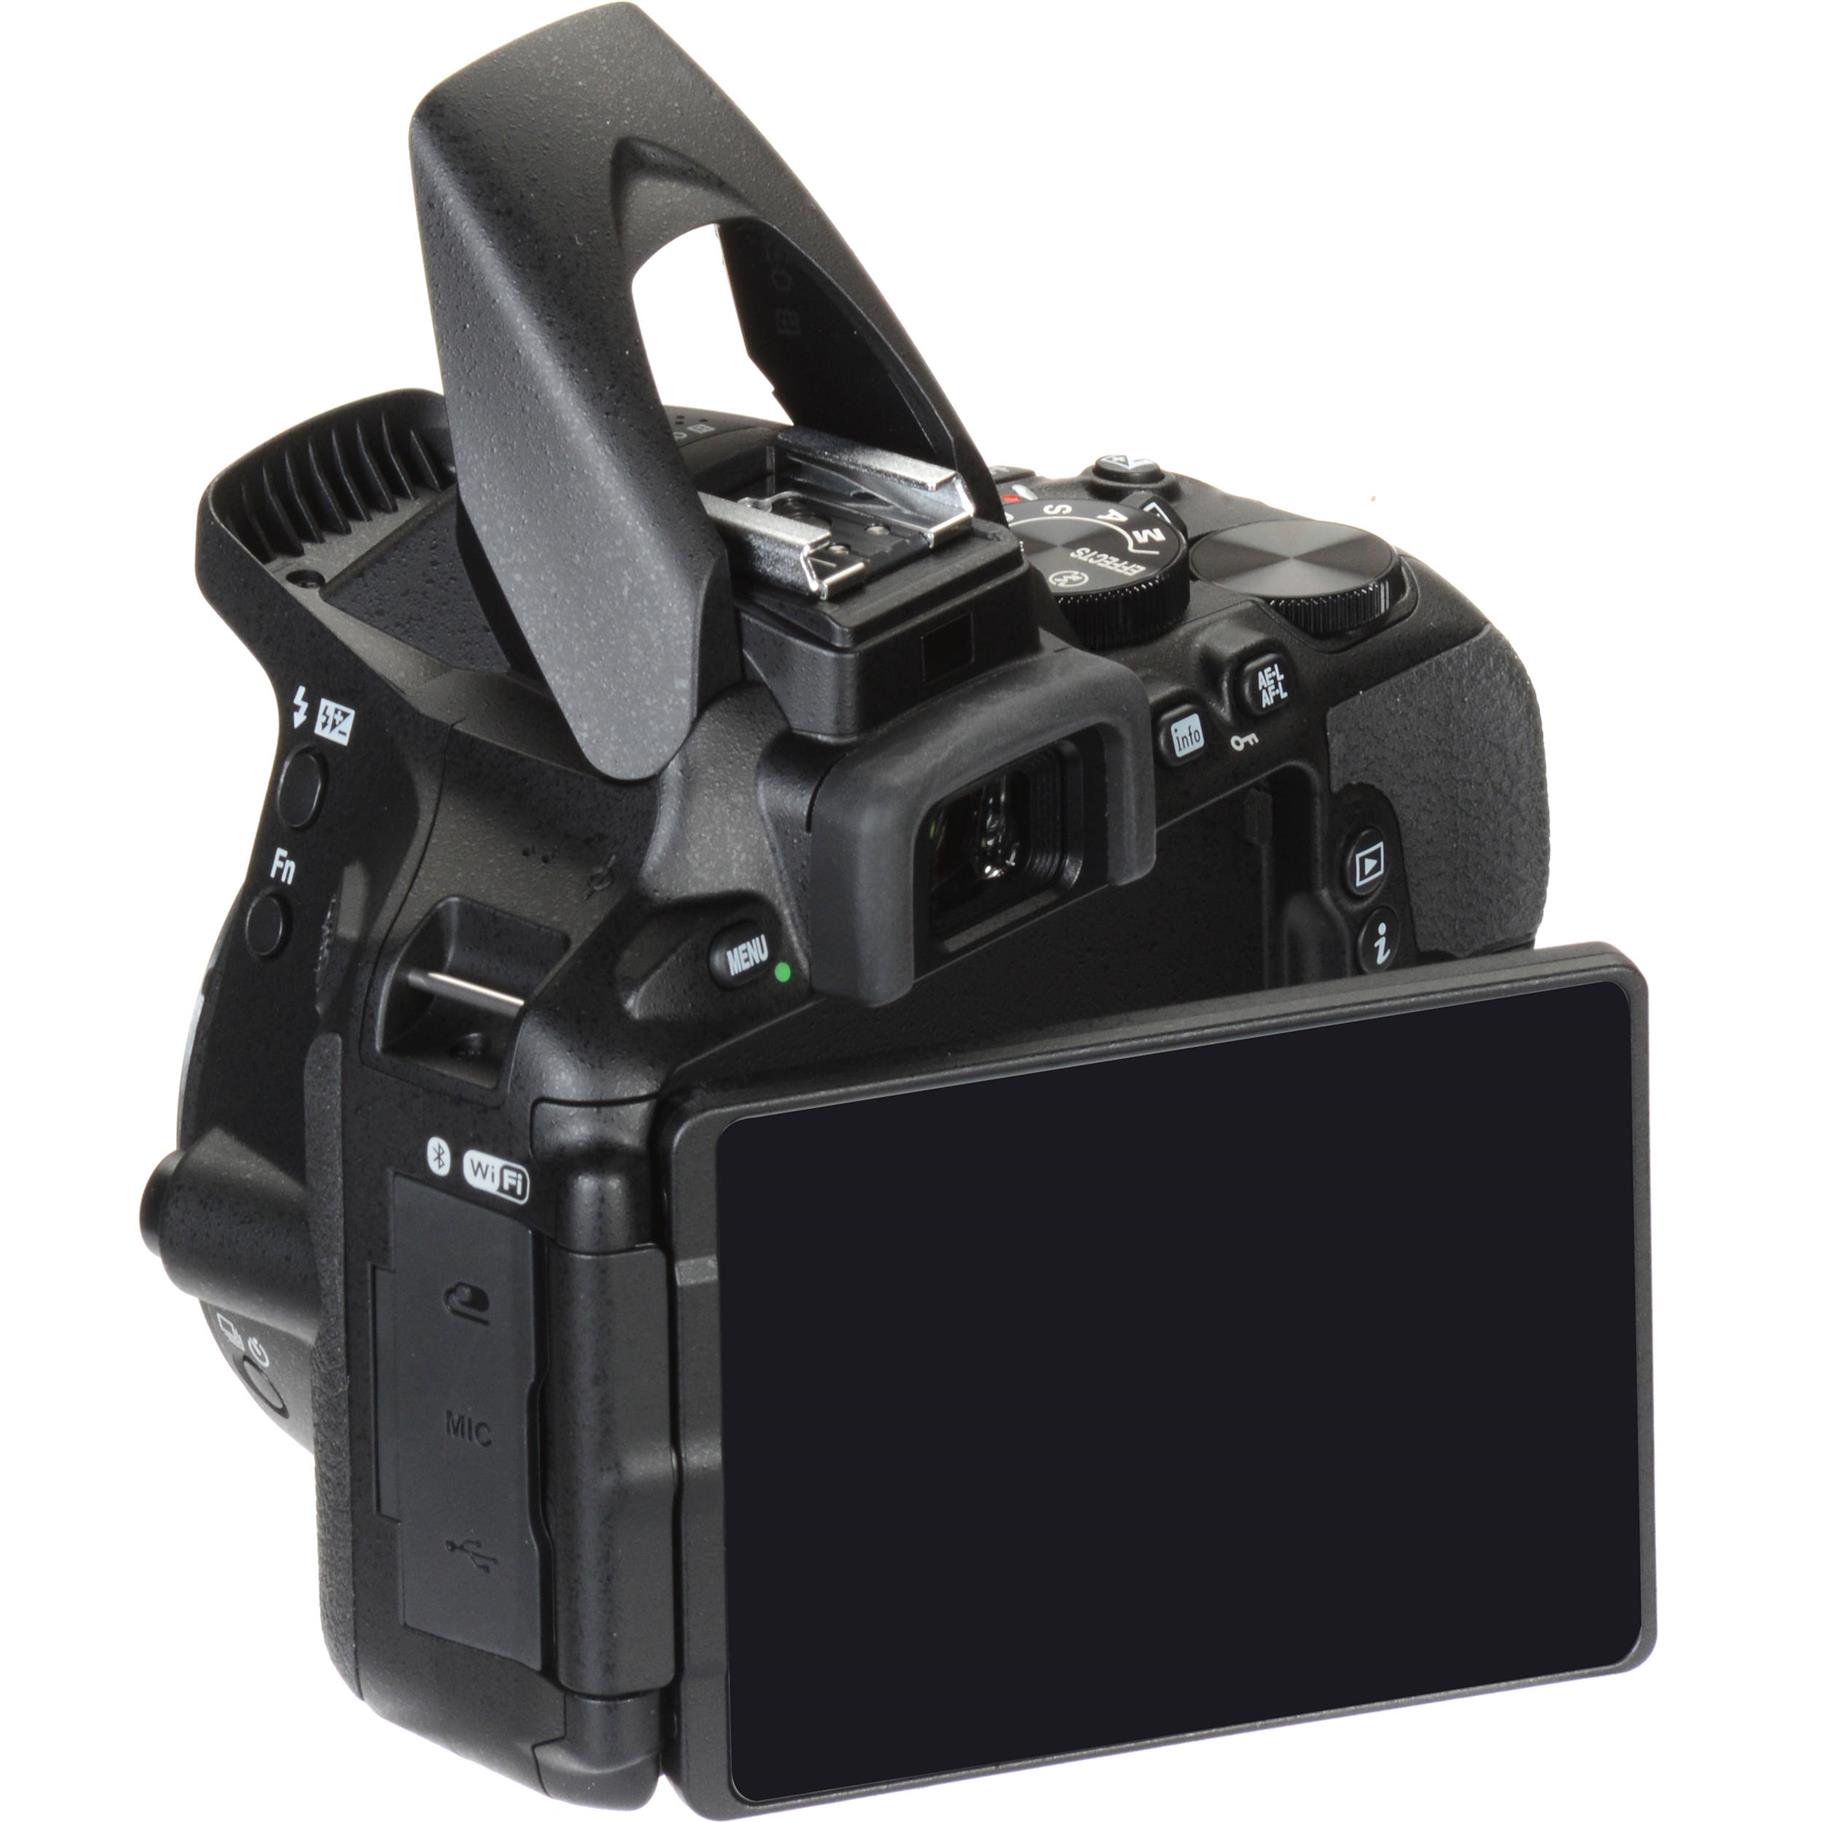 Nikon D5600 24.2 MP DX-format Digital SLR Body Black - image 5 of 9